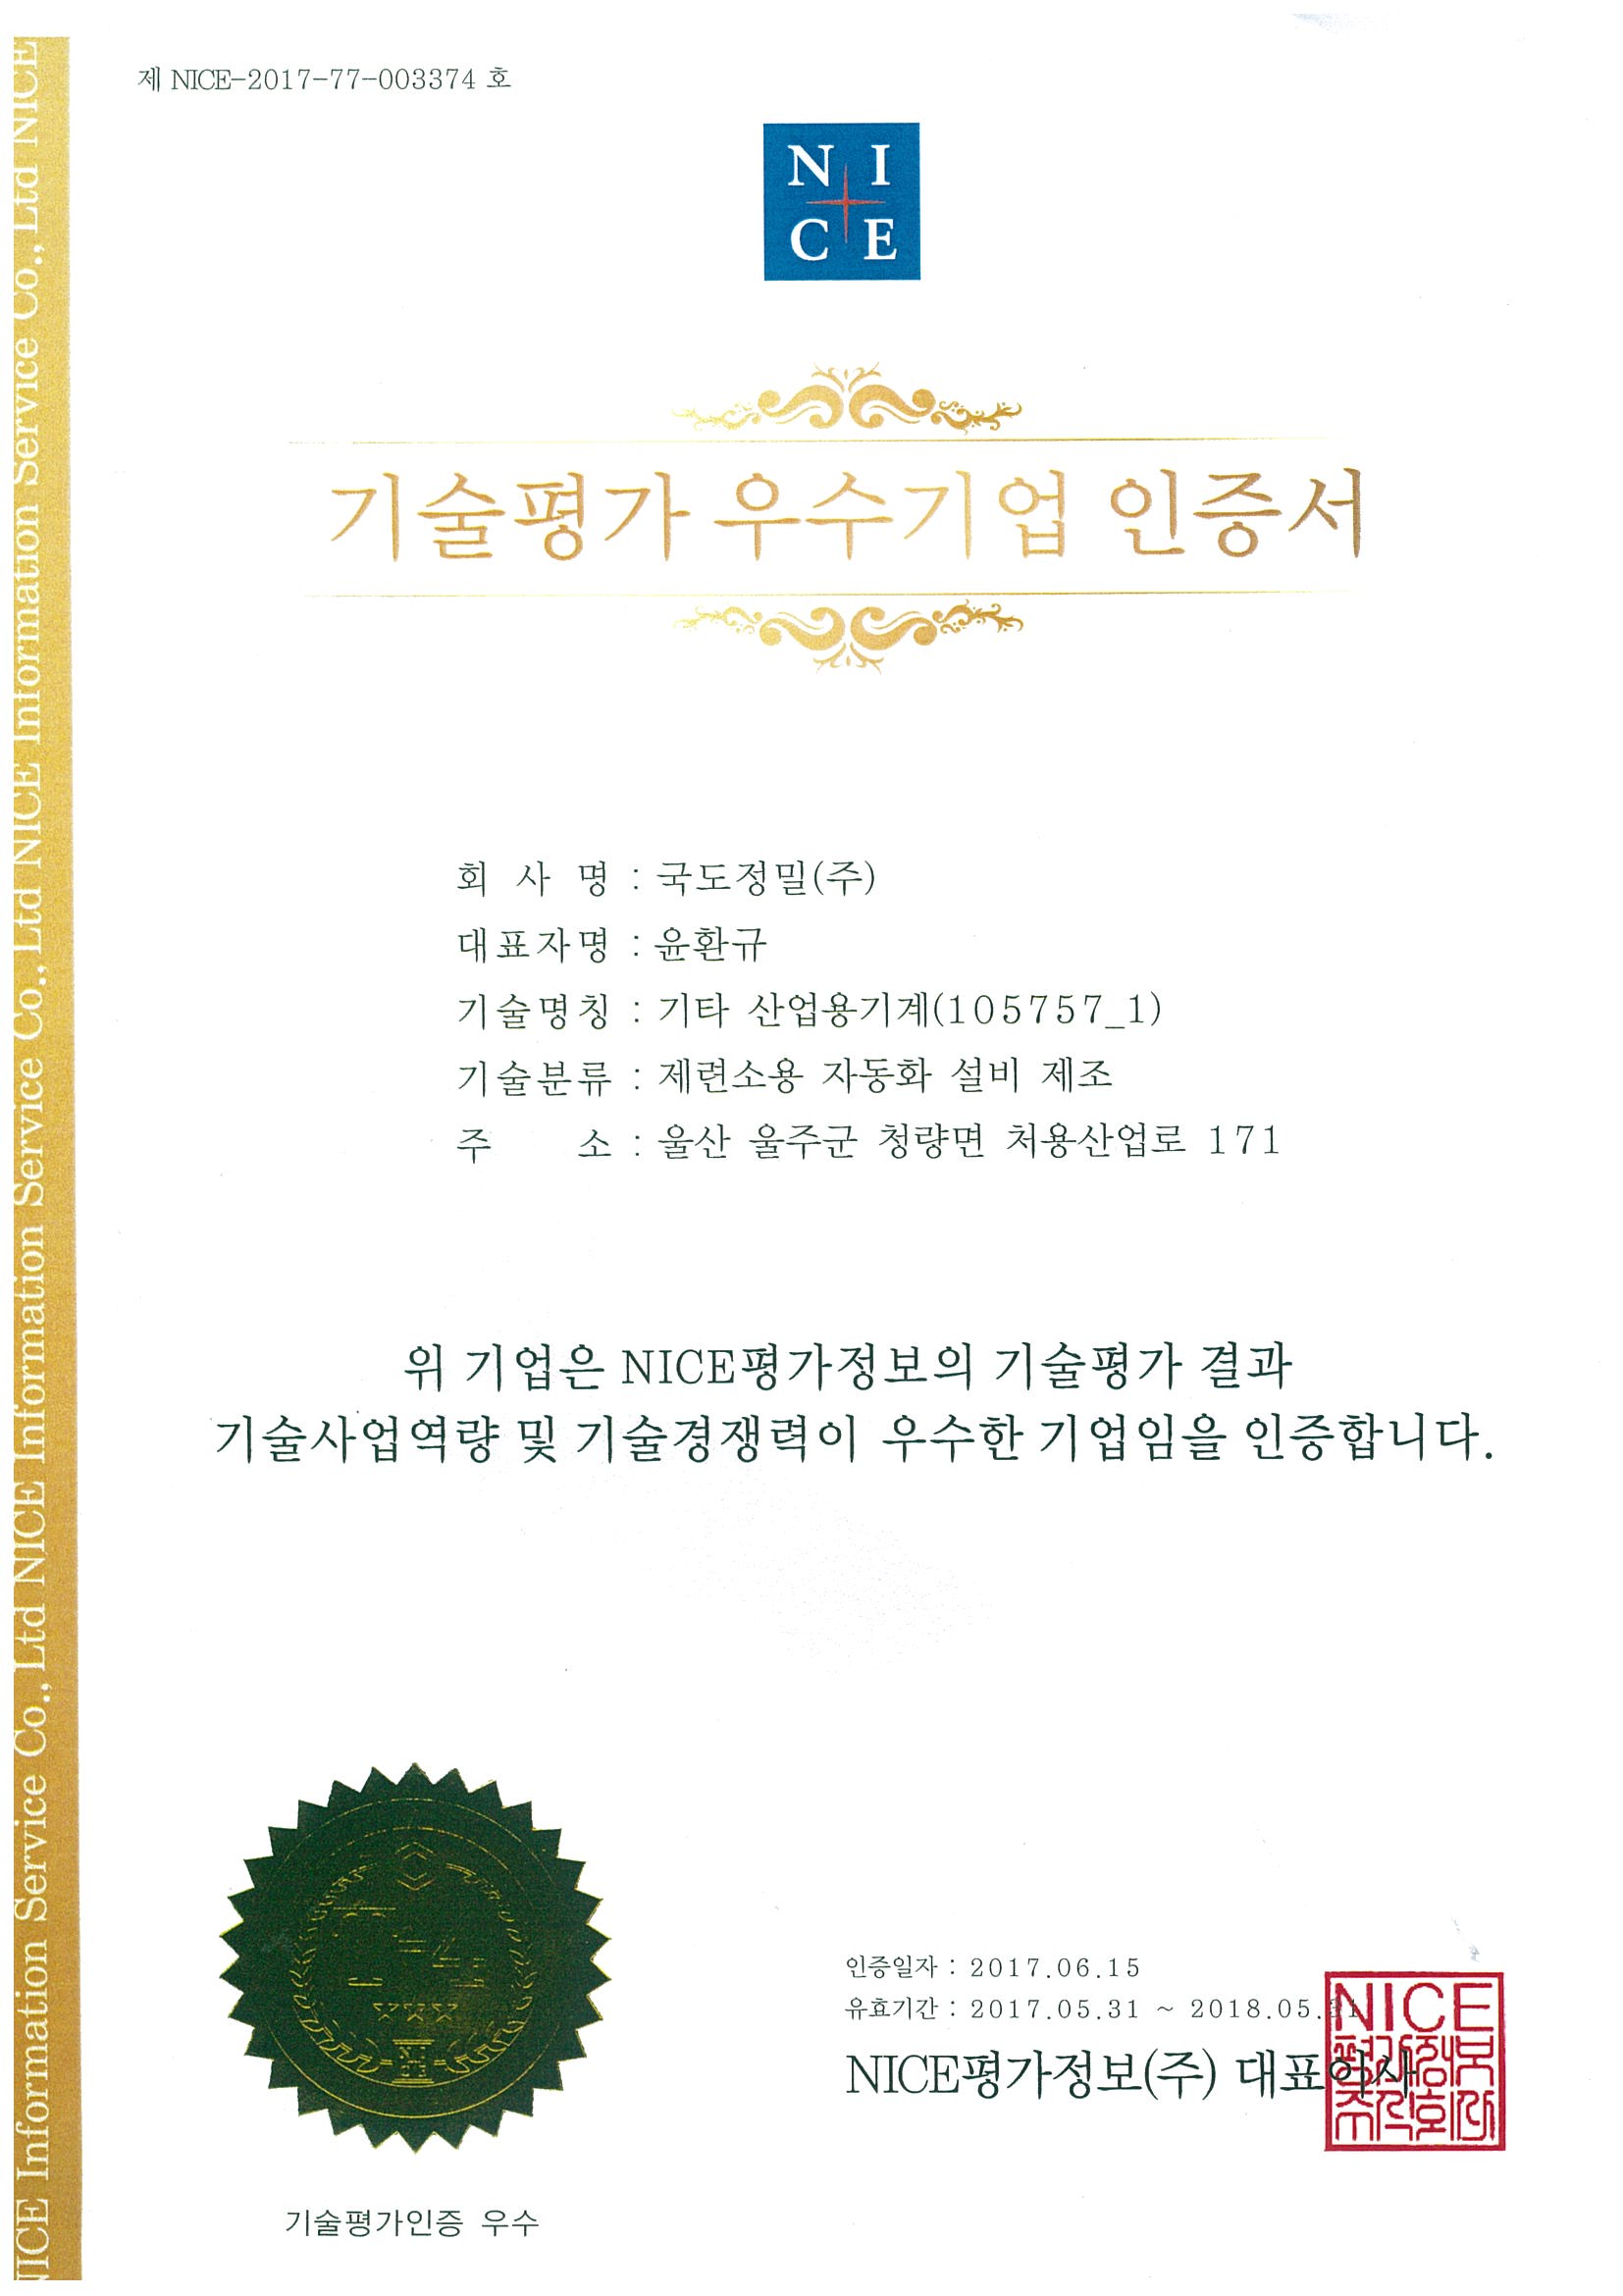 Certificate of Technical Achievement